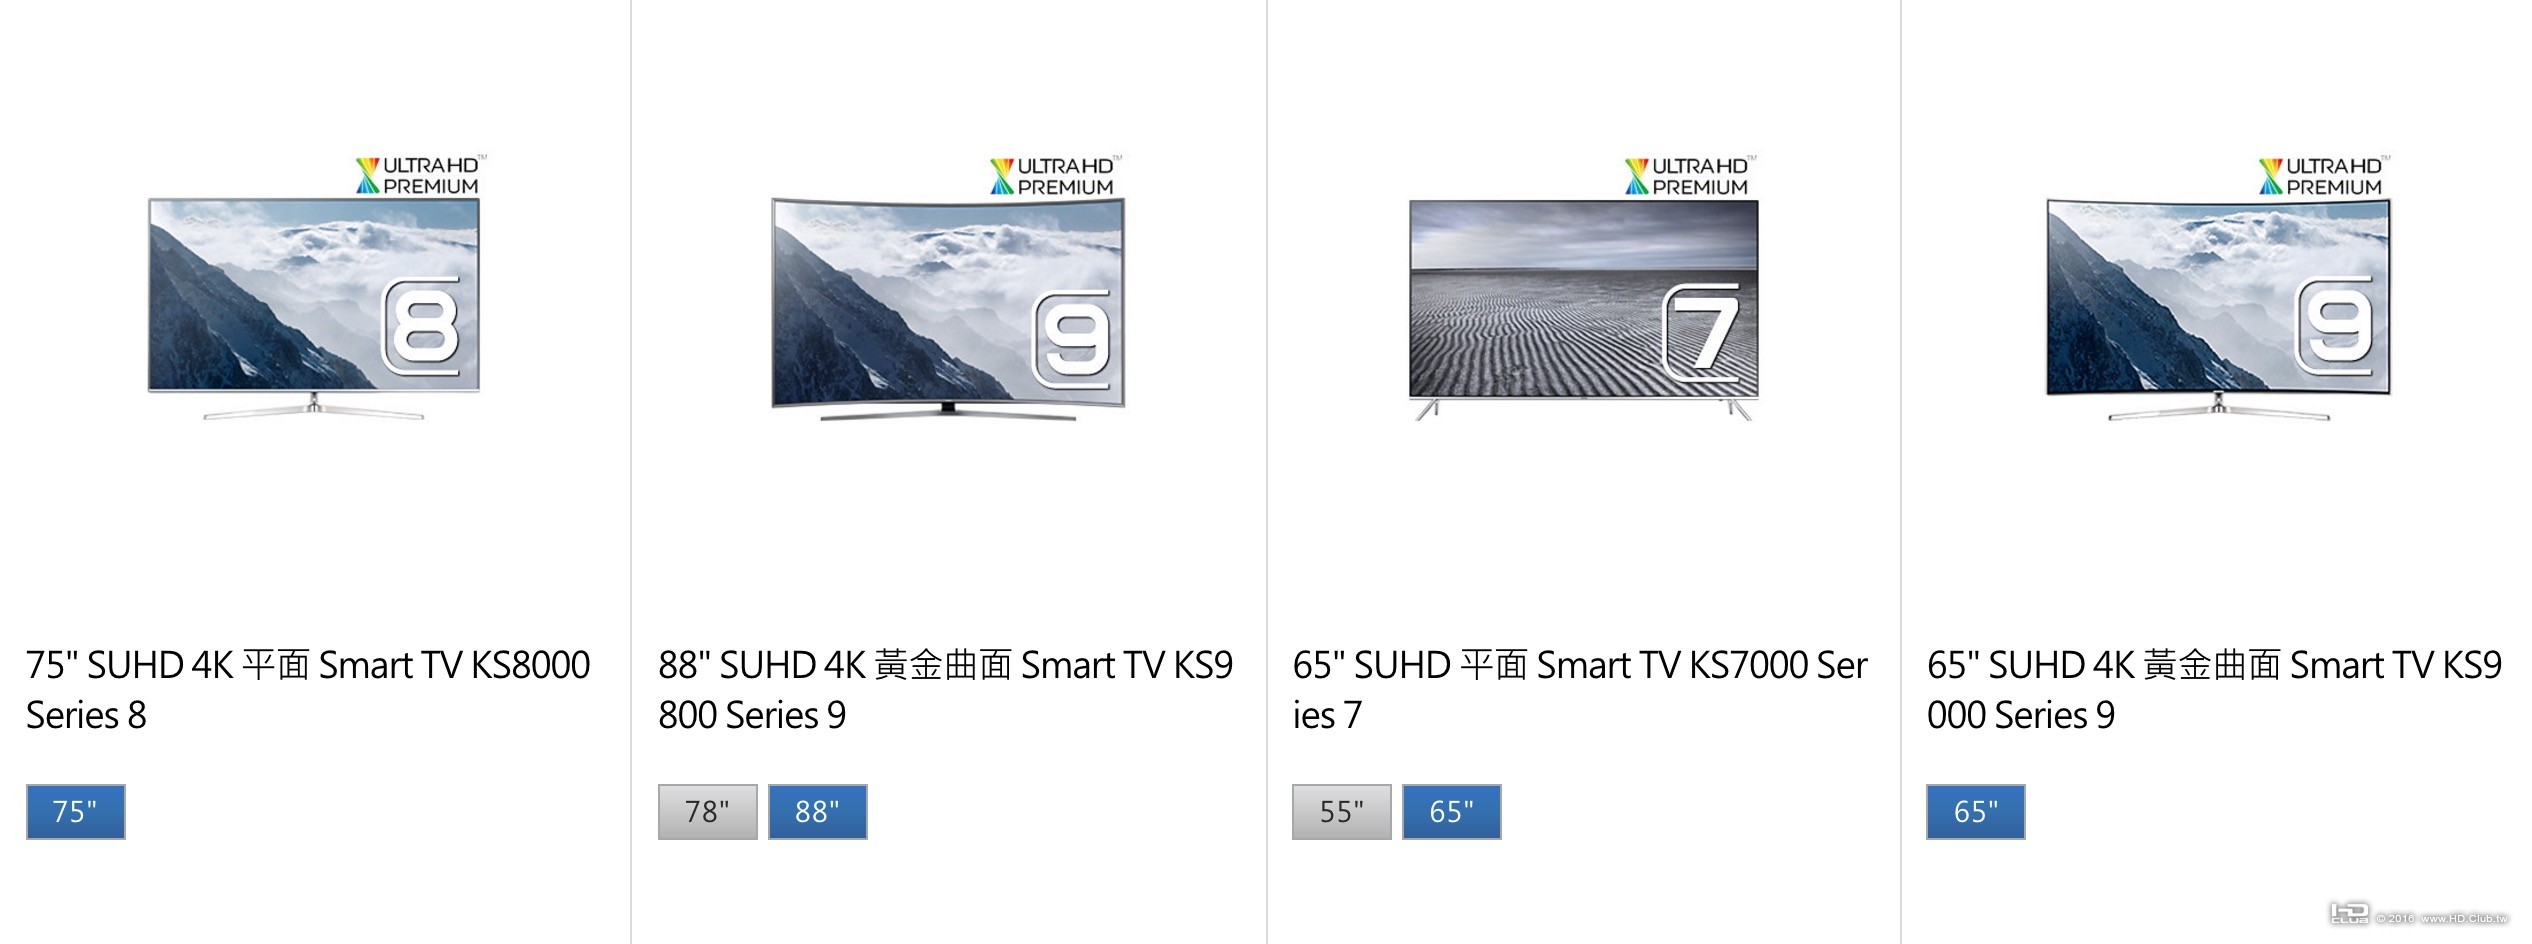 Samsung SUHD TV 2016.jpg